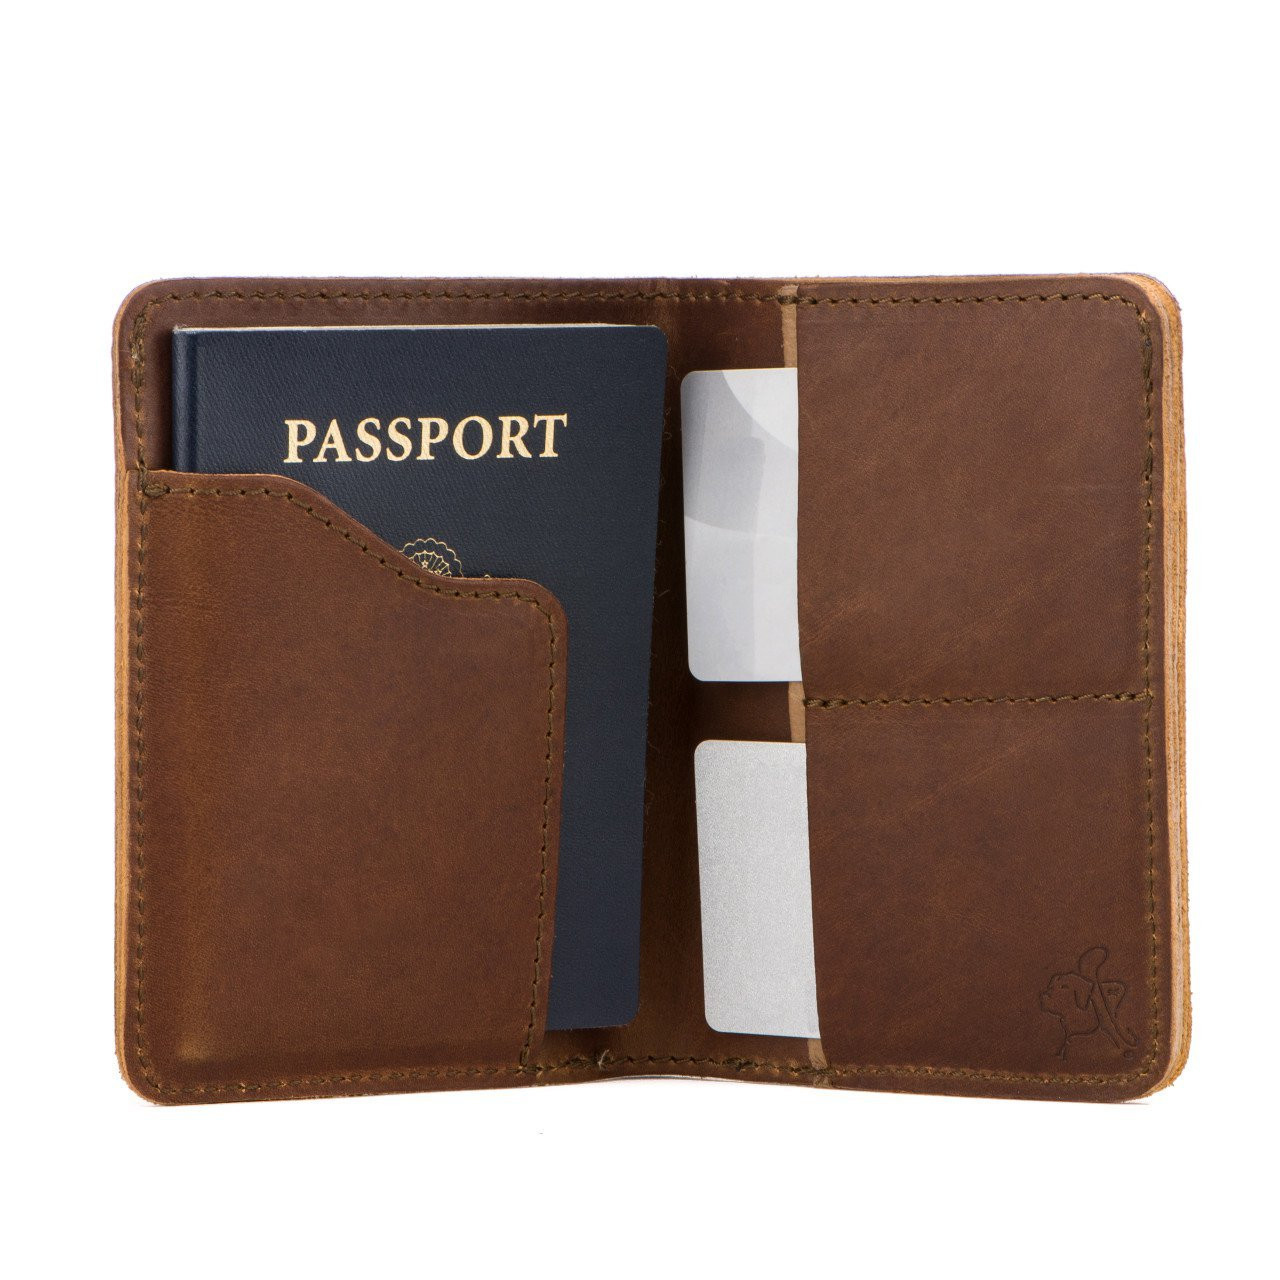 Better-Than-Leather Travel Wallet: Lambskin!